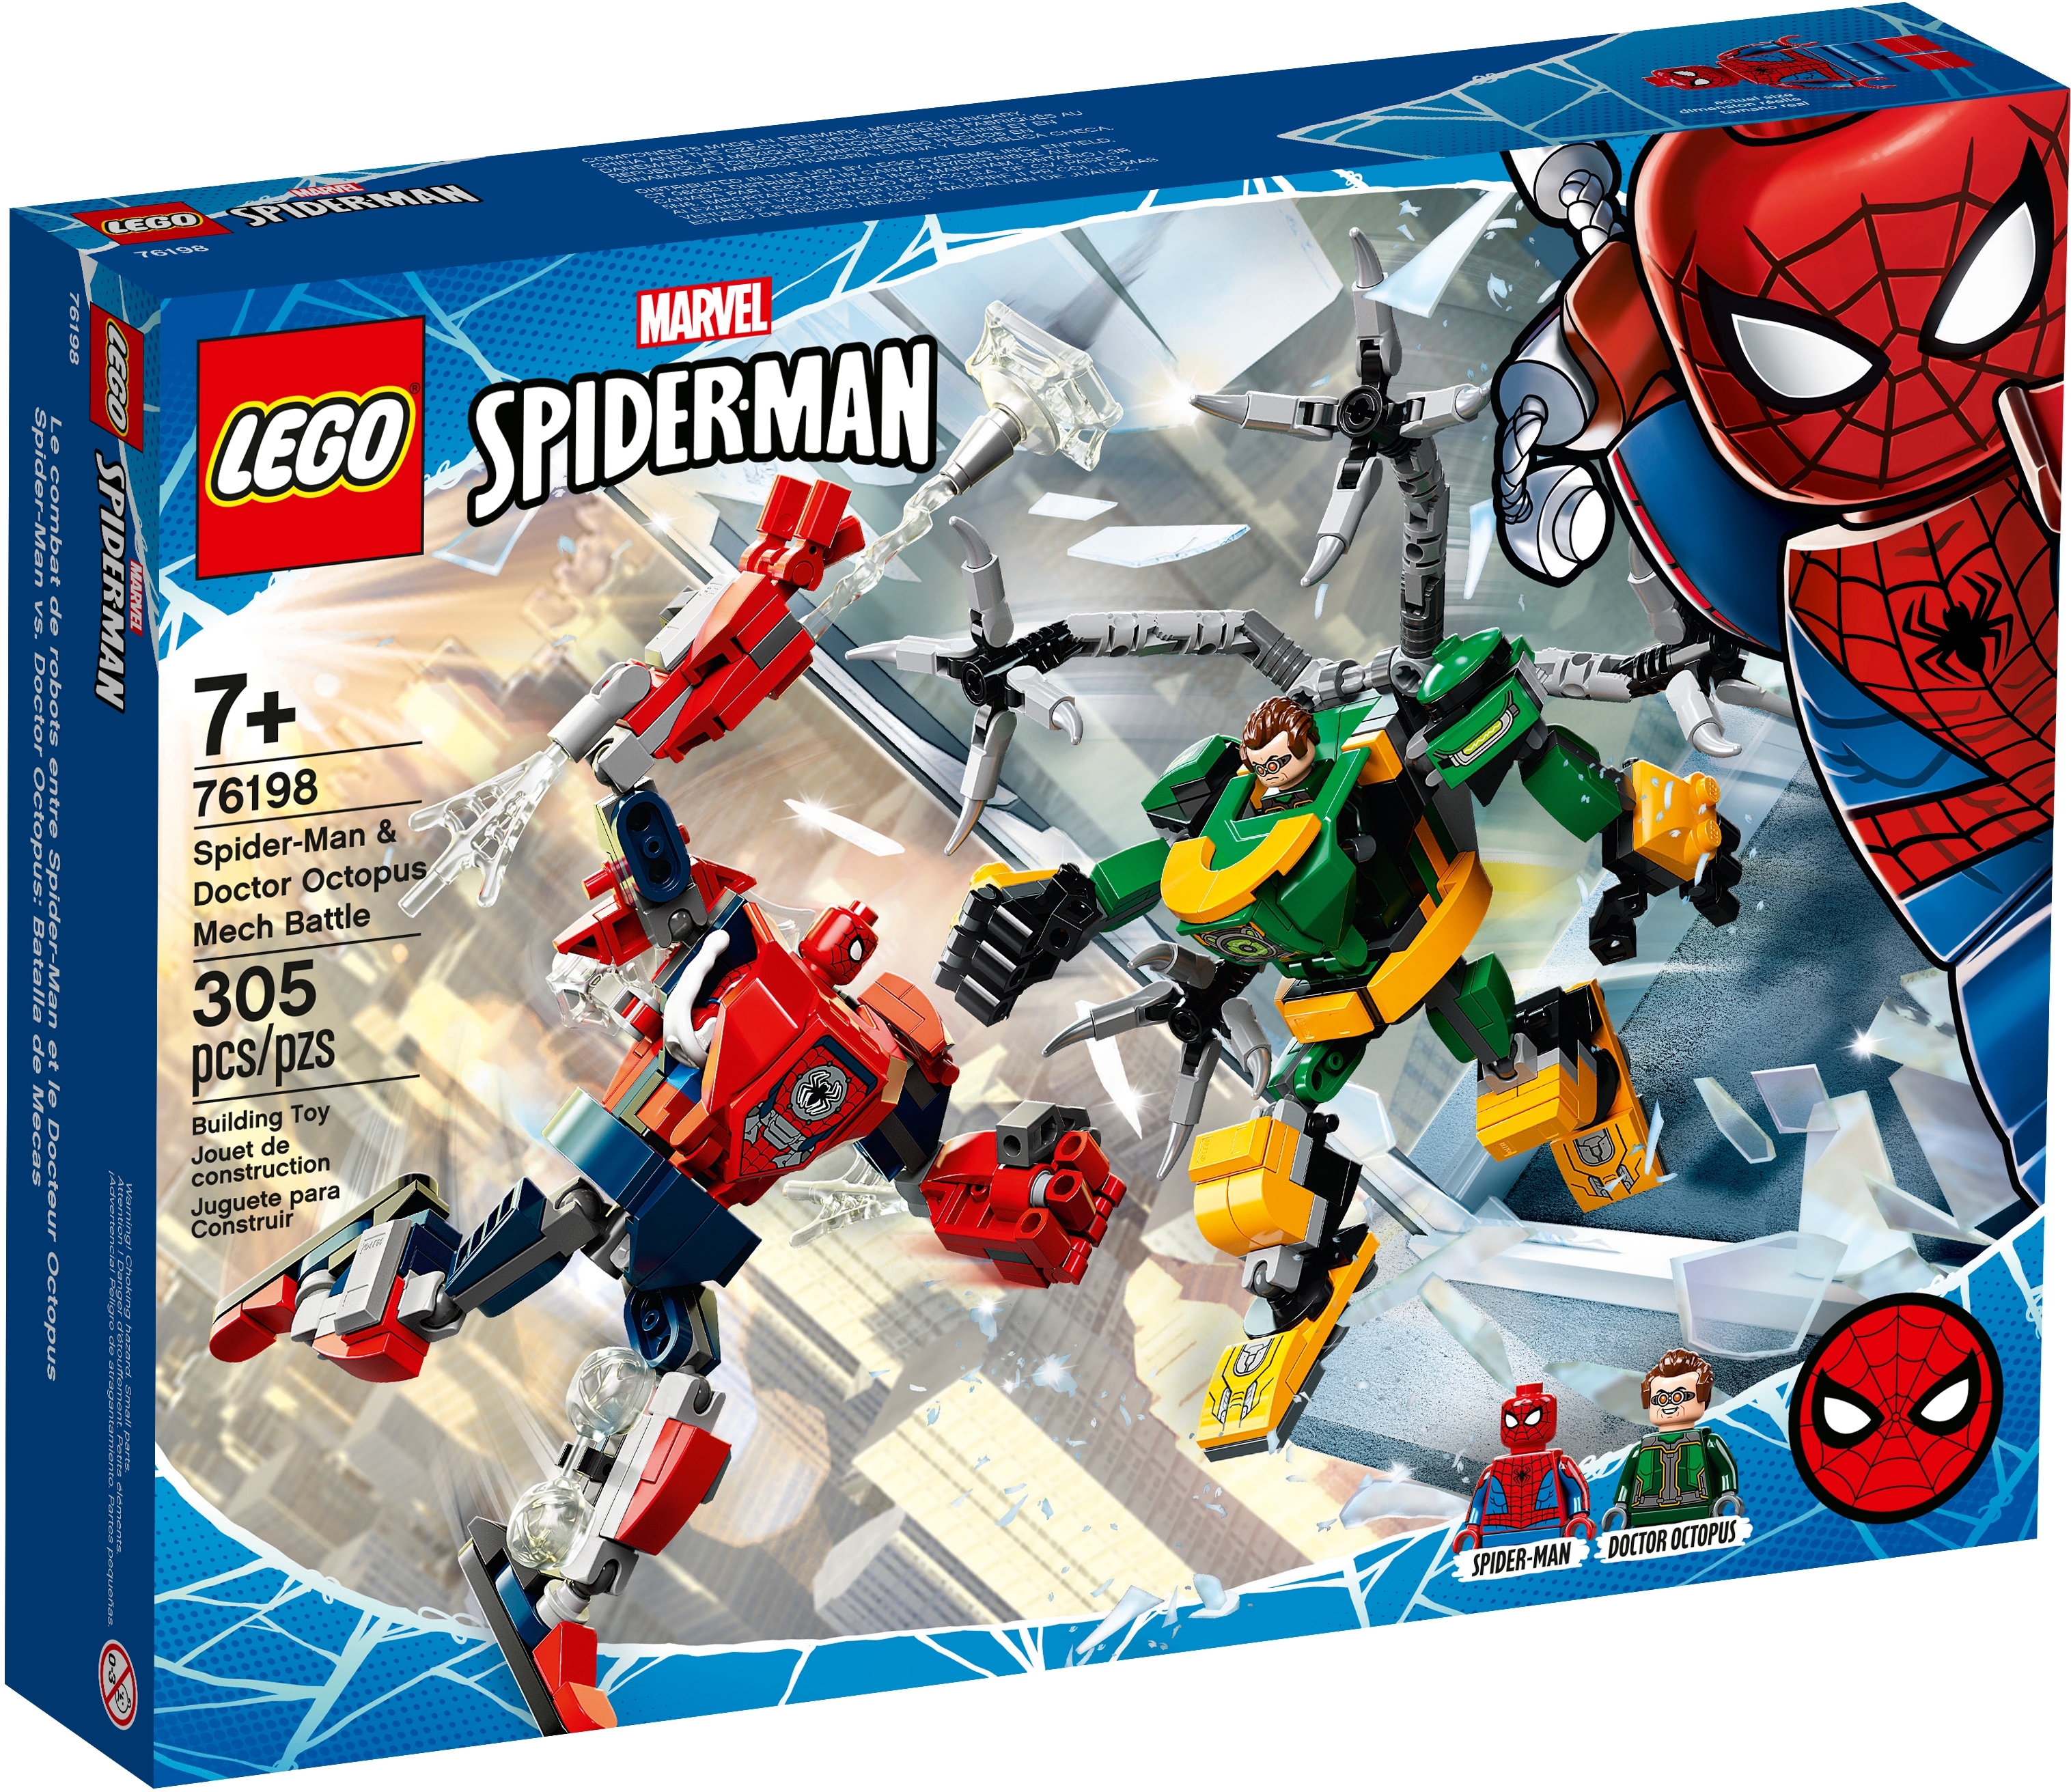 spiderman vs doc ock toys